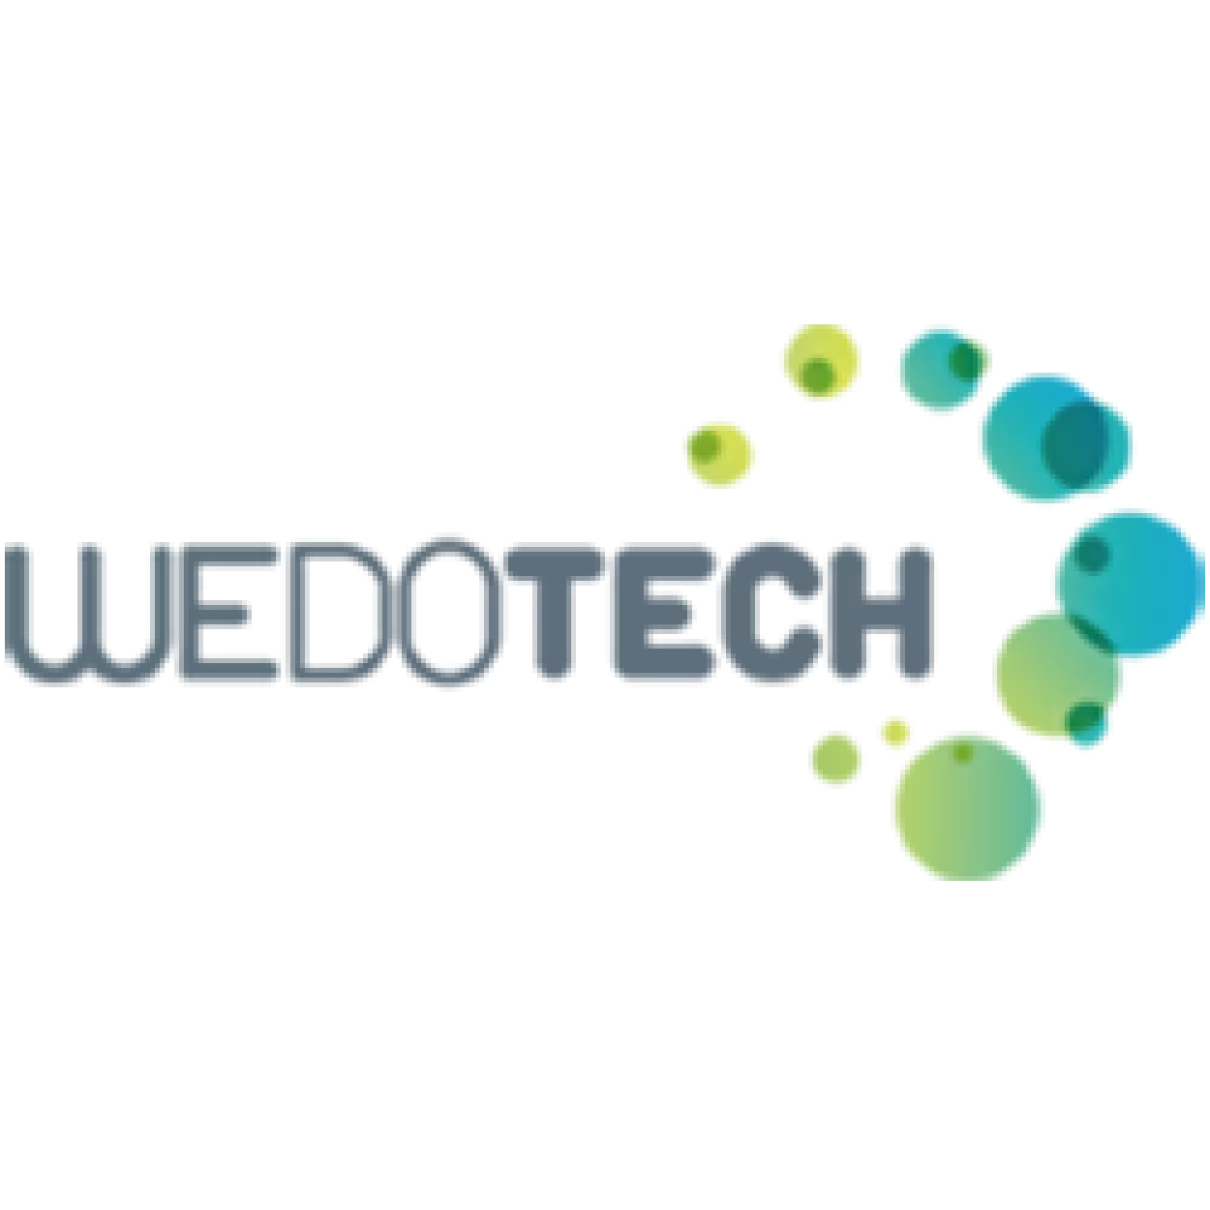 WeDoTech